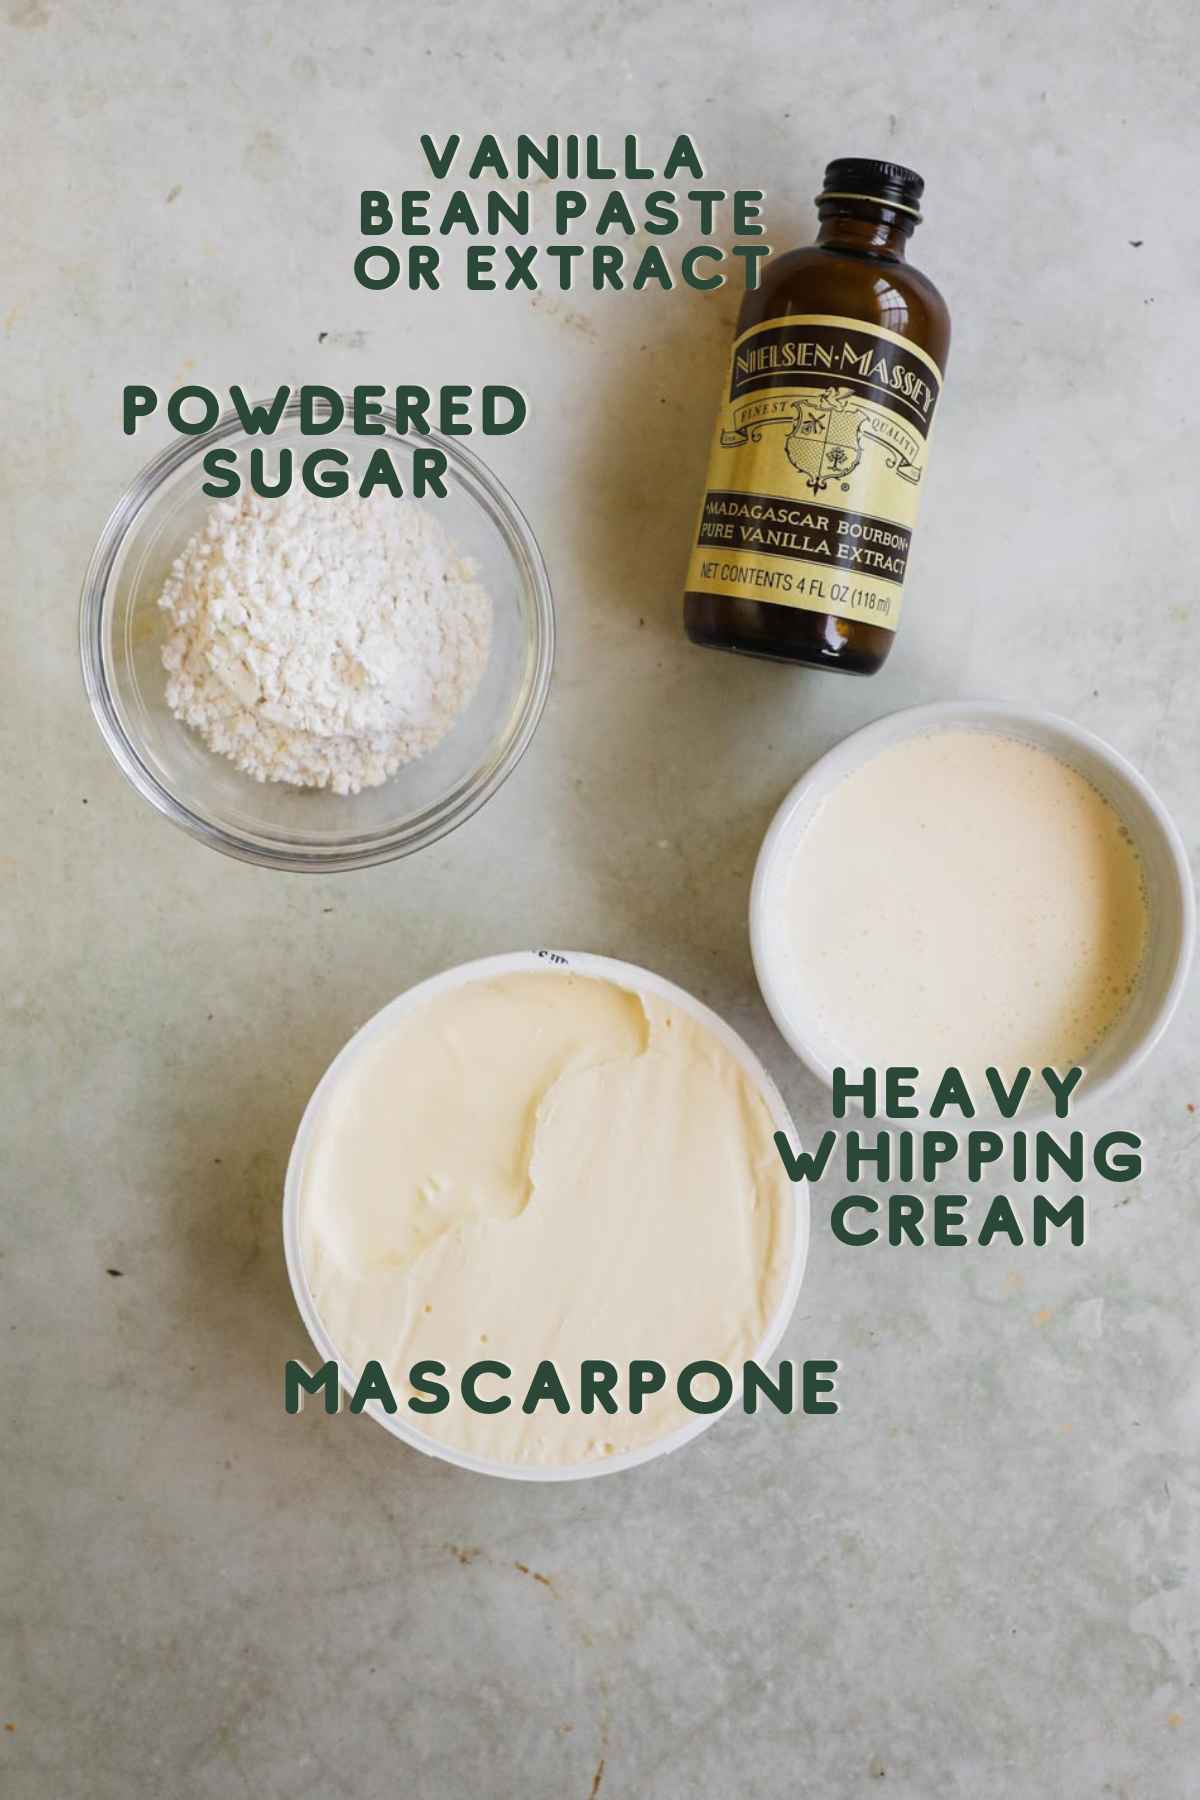 Ingredients for vanilla mascarpone frosting, vanilla bean paste or extract, powdered sugar, heavy whipping cream, mascarpone.